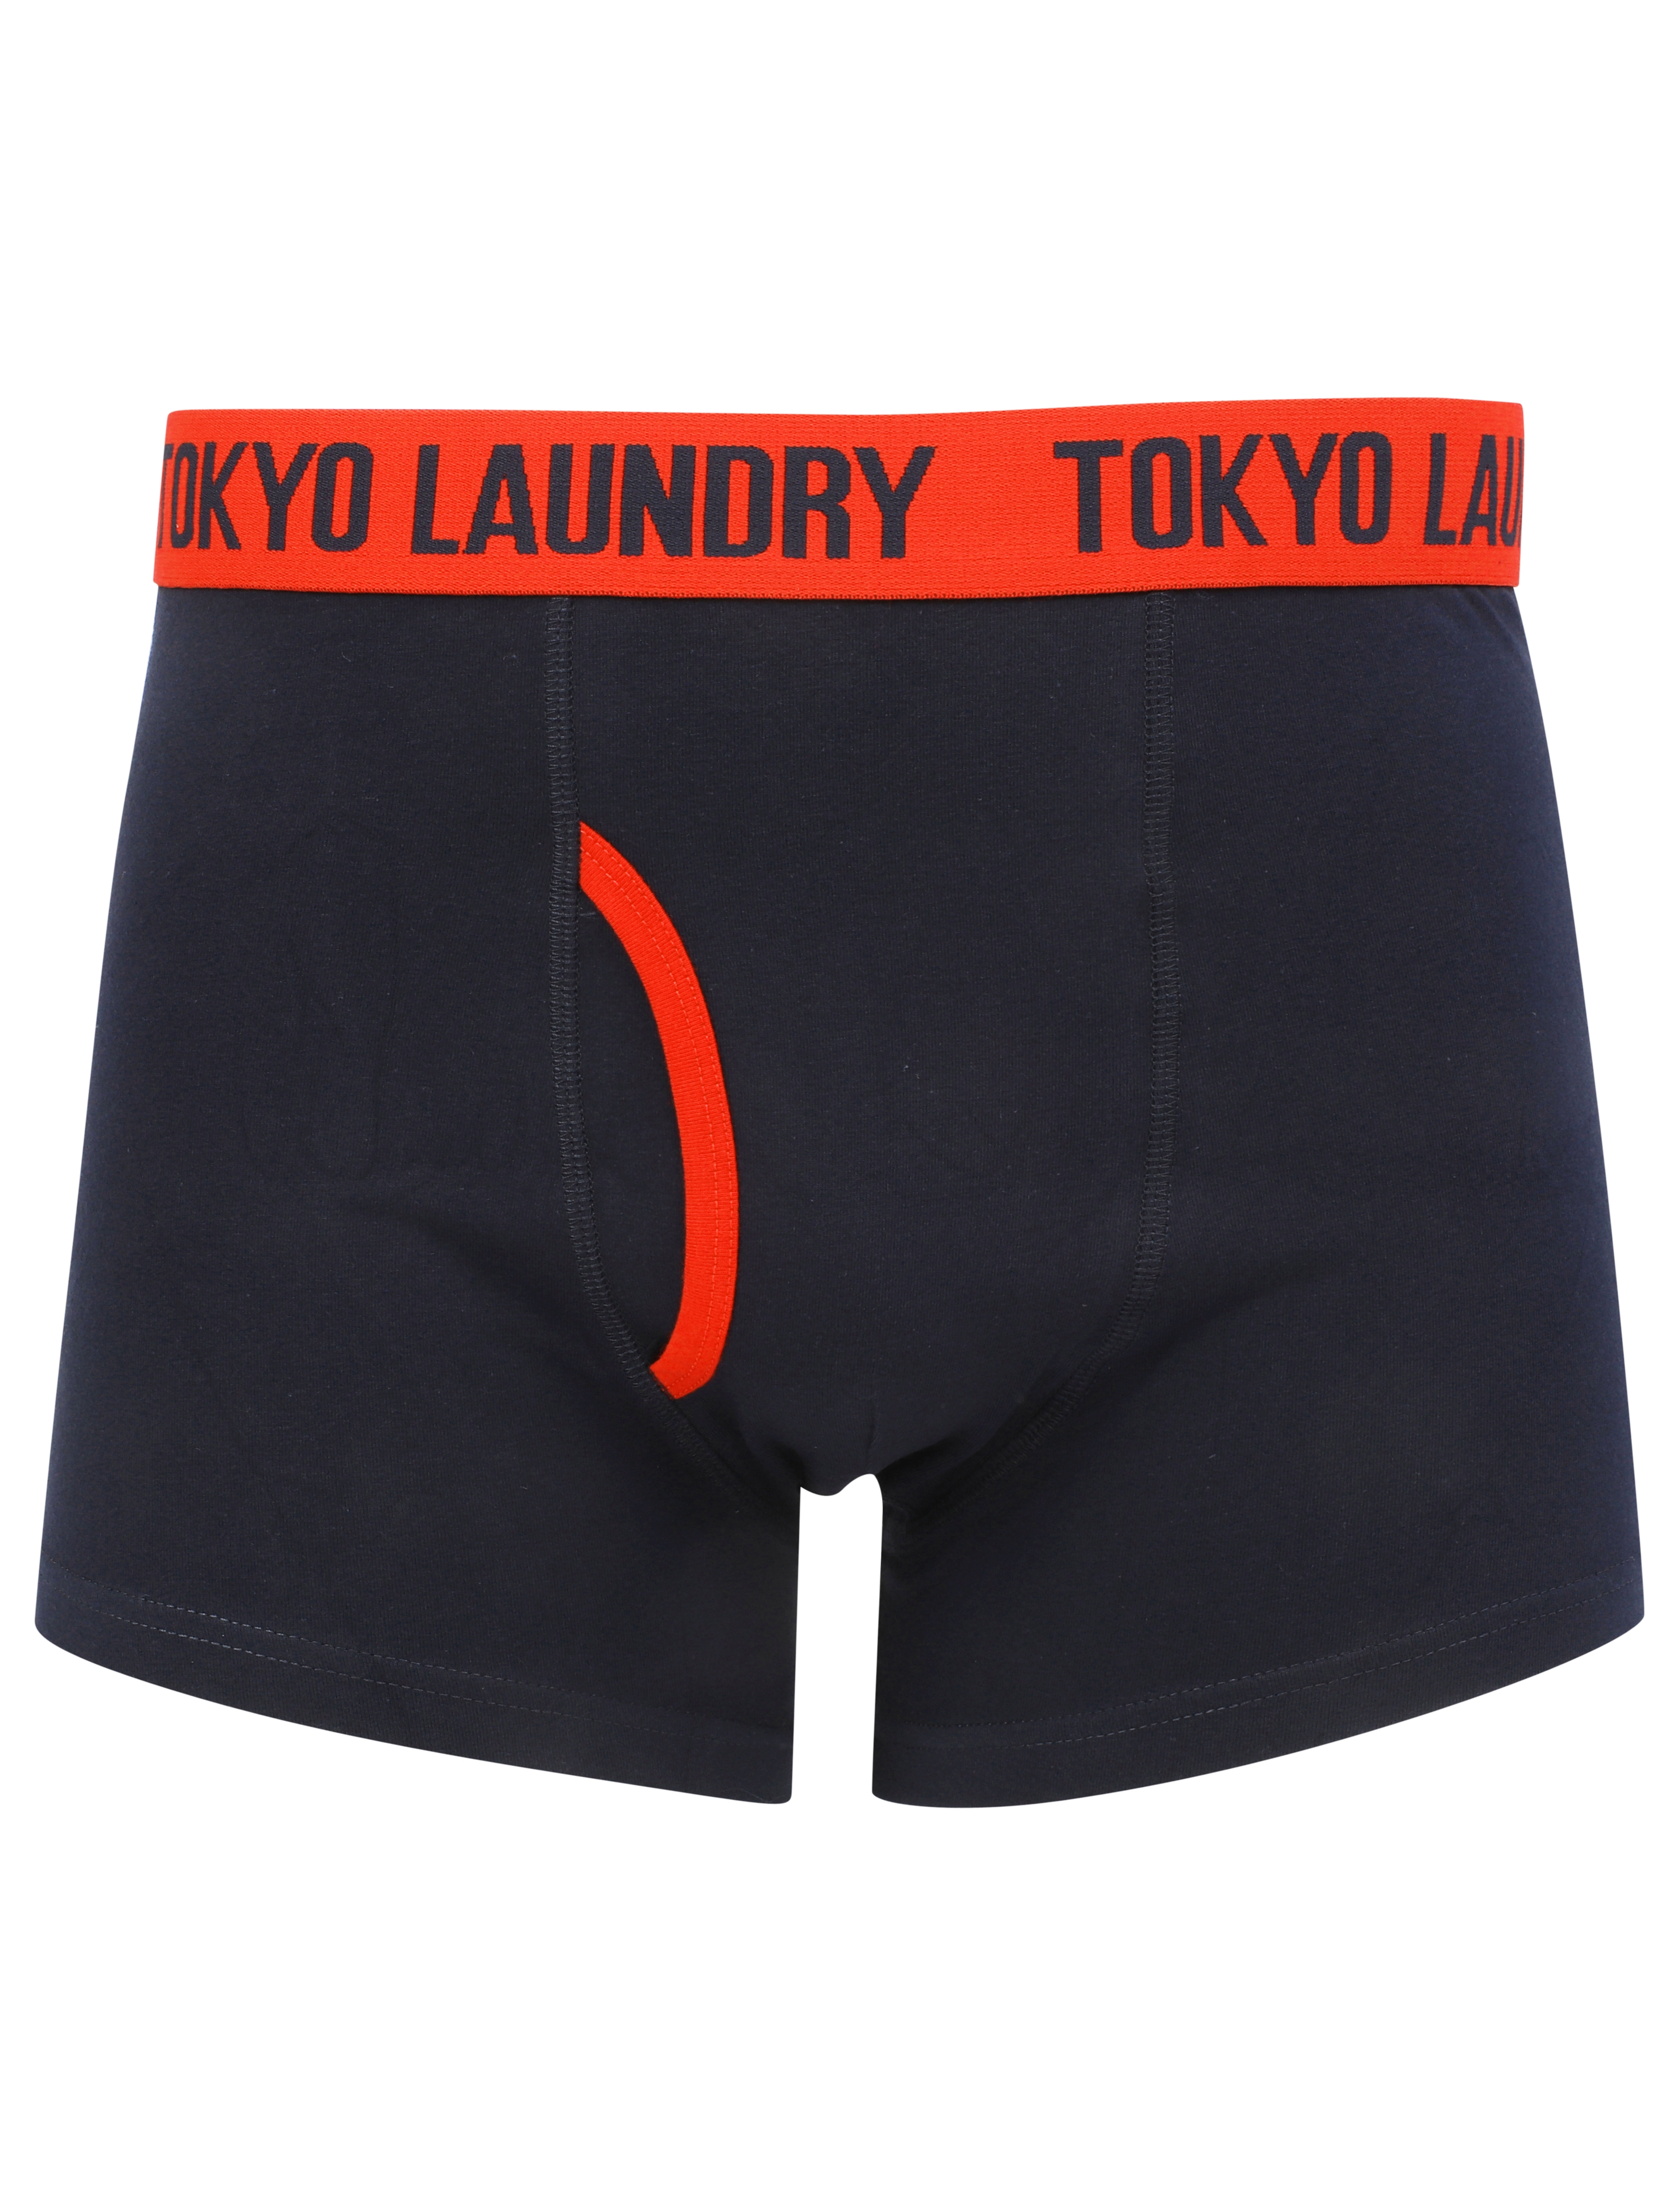 New Mens Tokyo Laundry Newburgh 2Pack Cotton Striped Boxer Shorts Set  